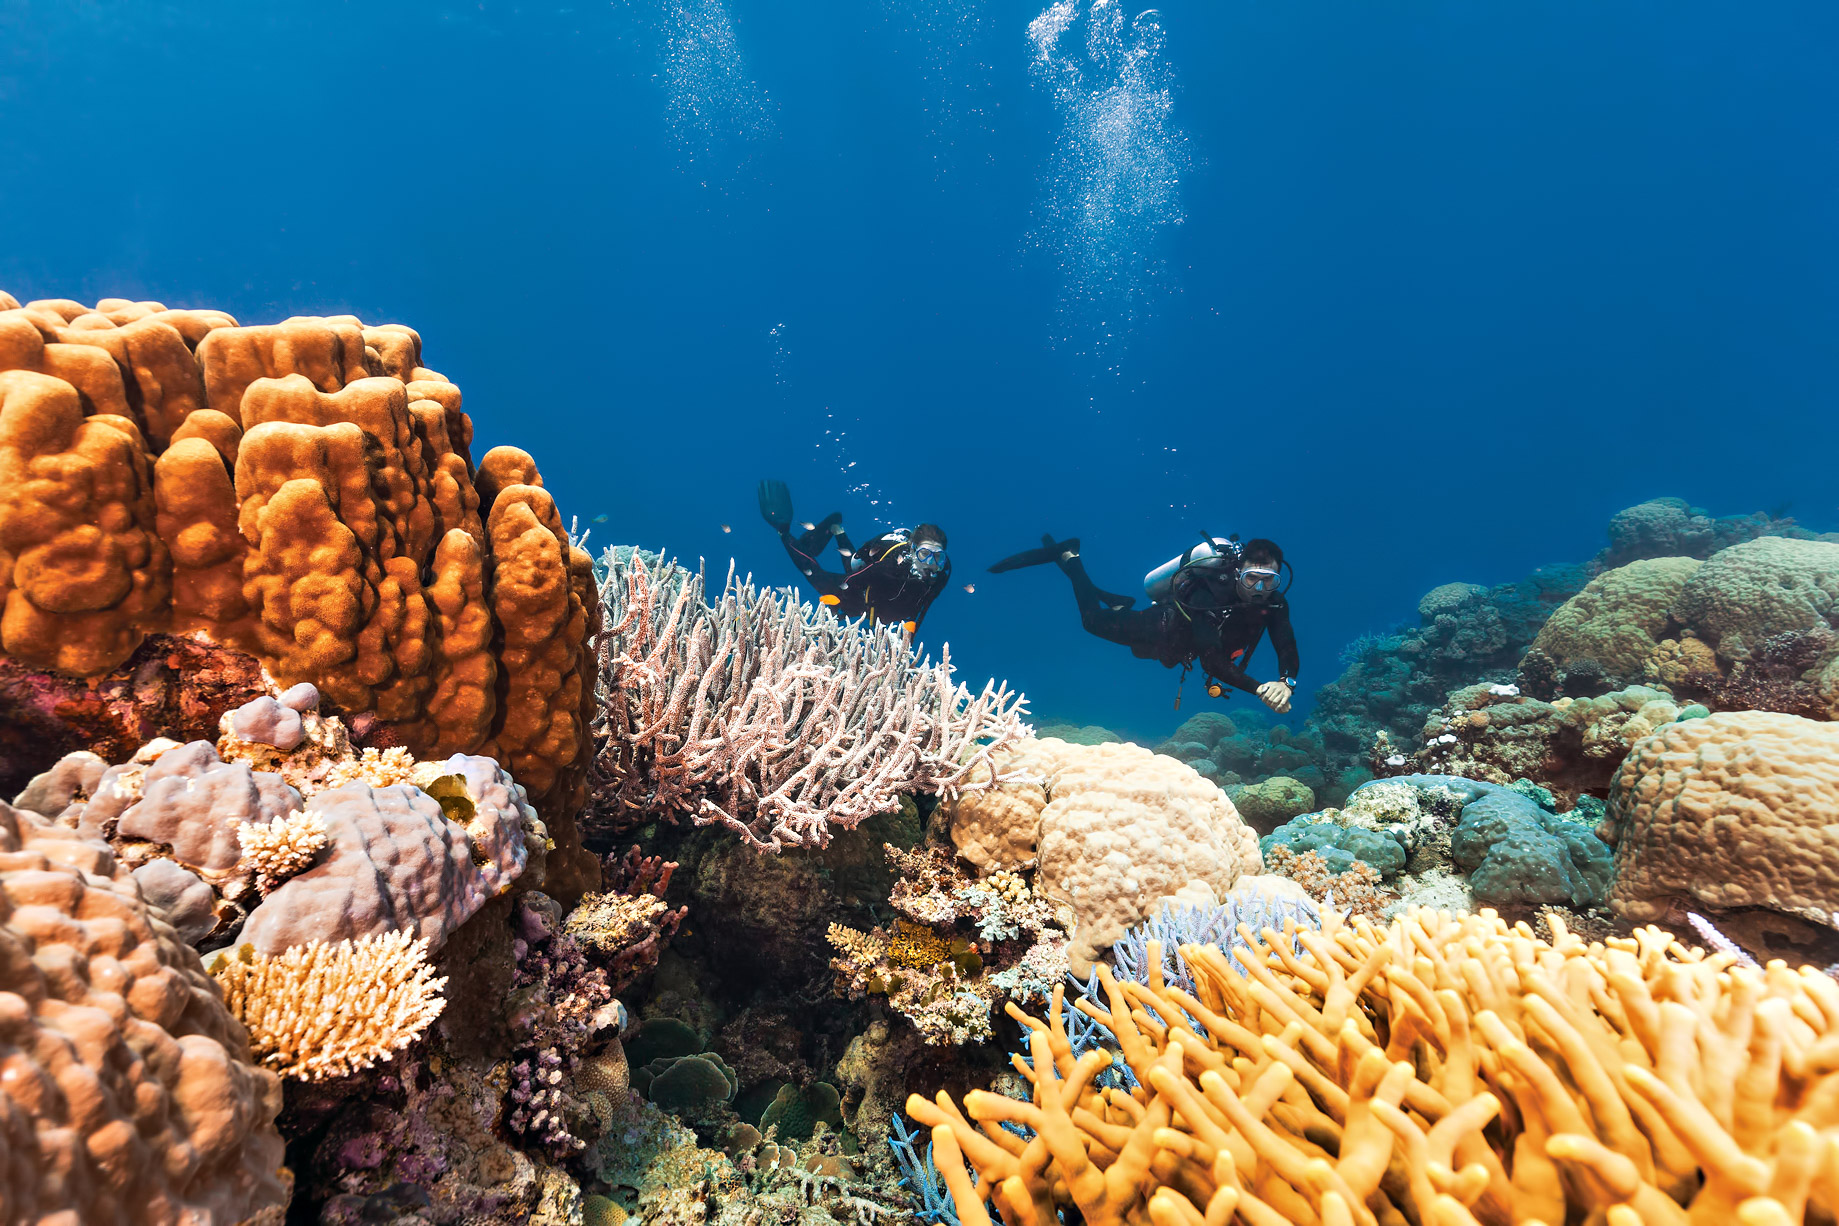 InterContinental Hayman Island Resort – Whitsunday Islands, Australia – Scuba Diving